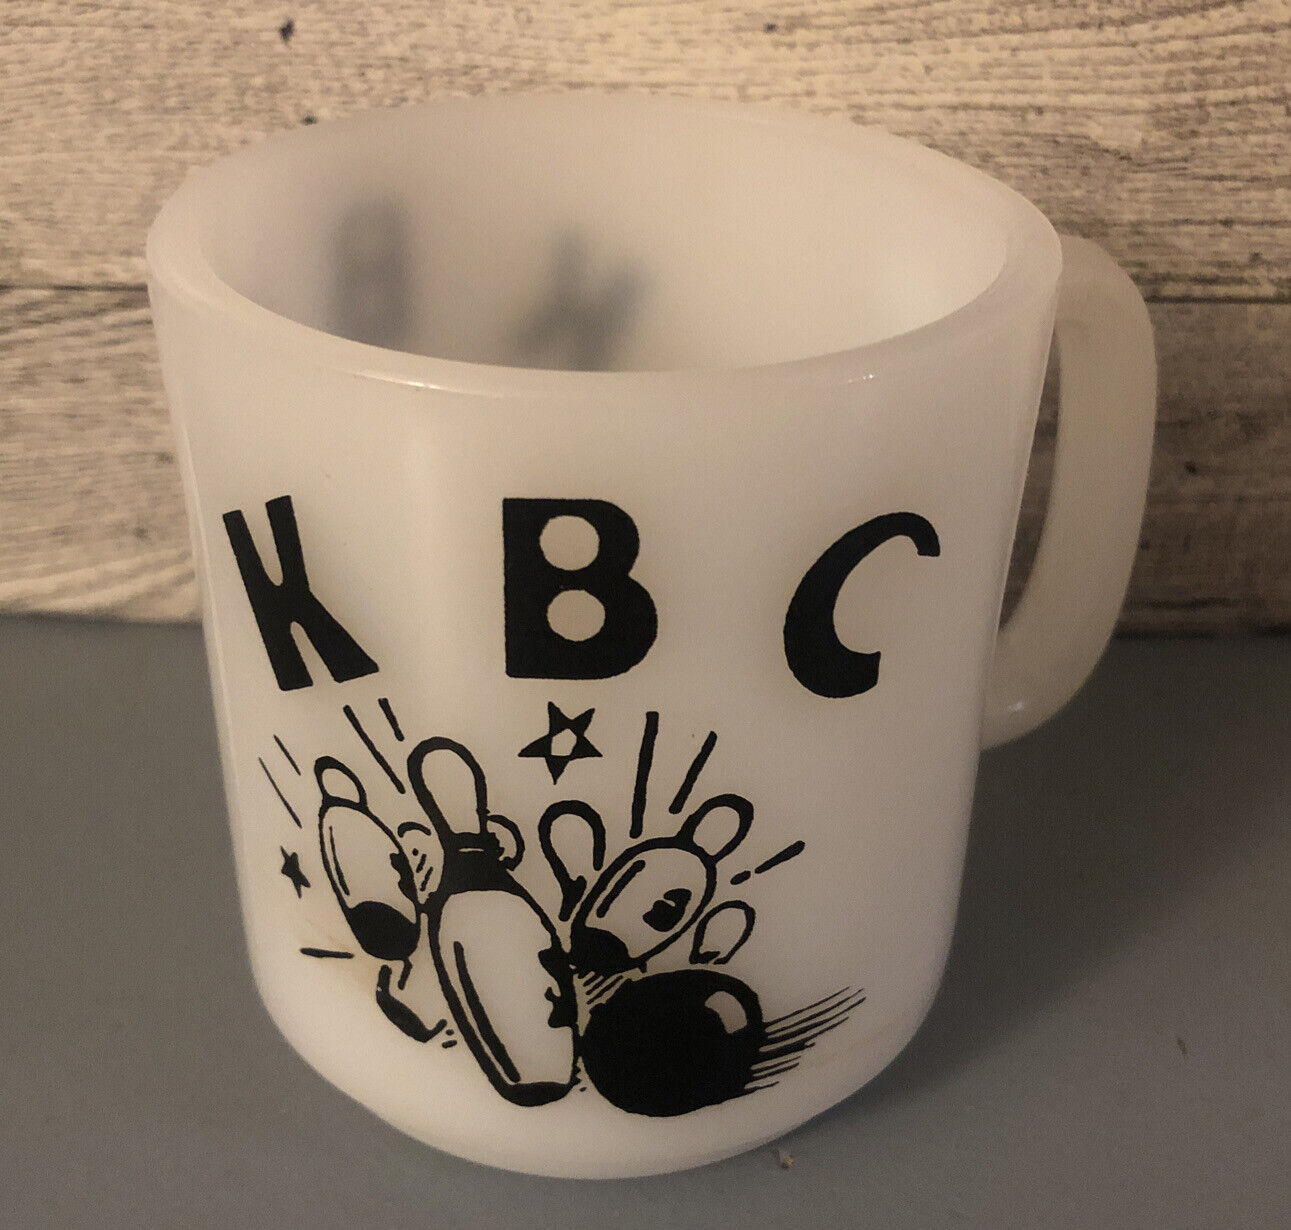 Vintage Glasbake Milk Glass Mug K B C Bowling Heat Resistant Coffee Mug